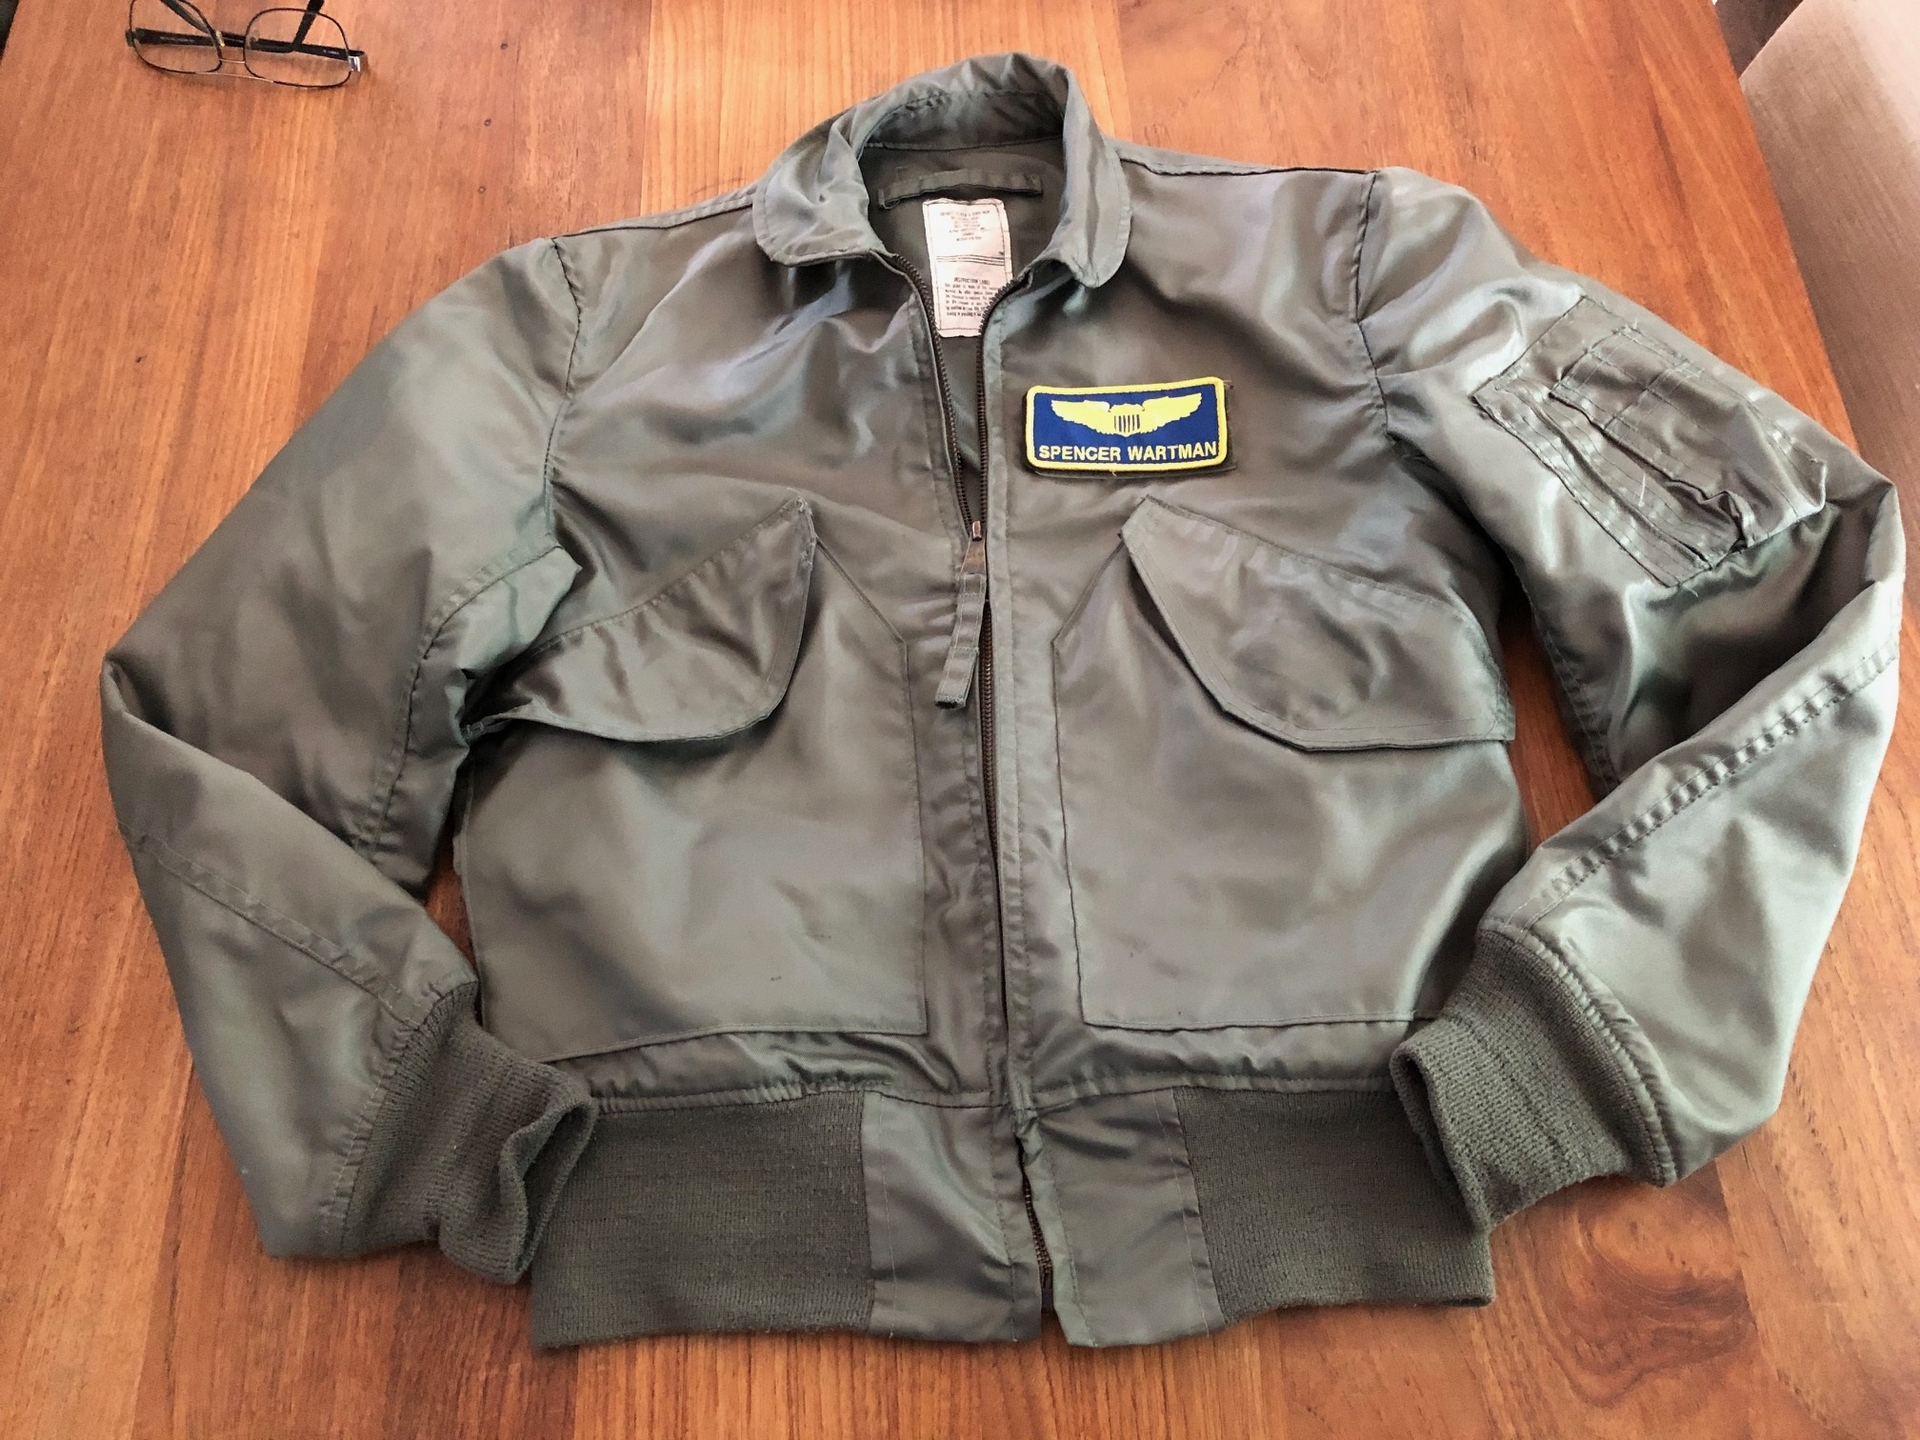 Nomex CWU-36/P flight jacket size Small 34-36 nametag Spencer W